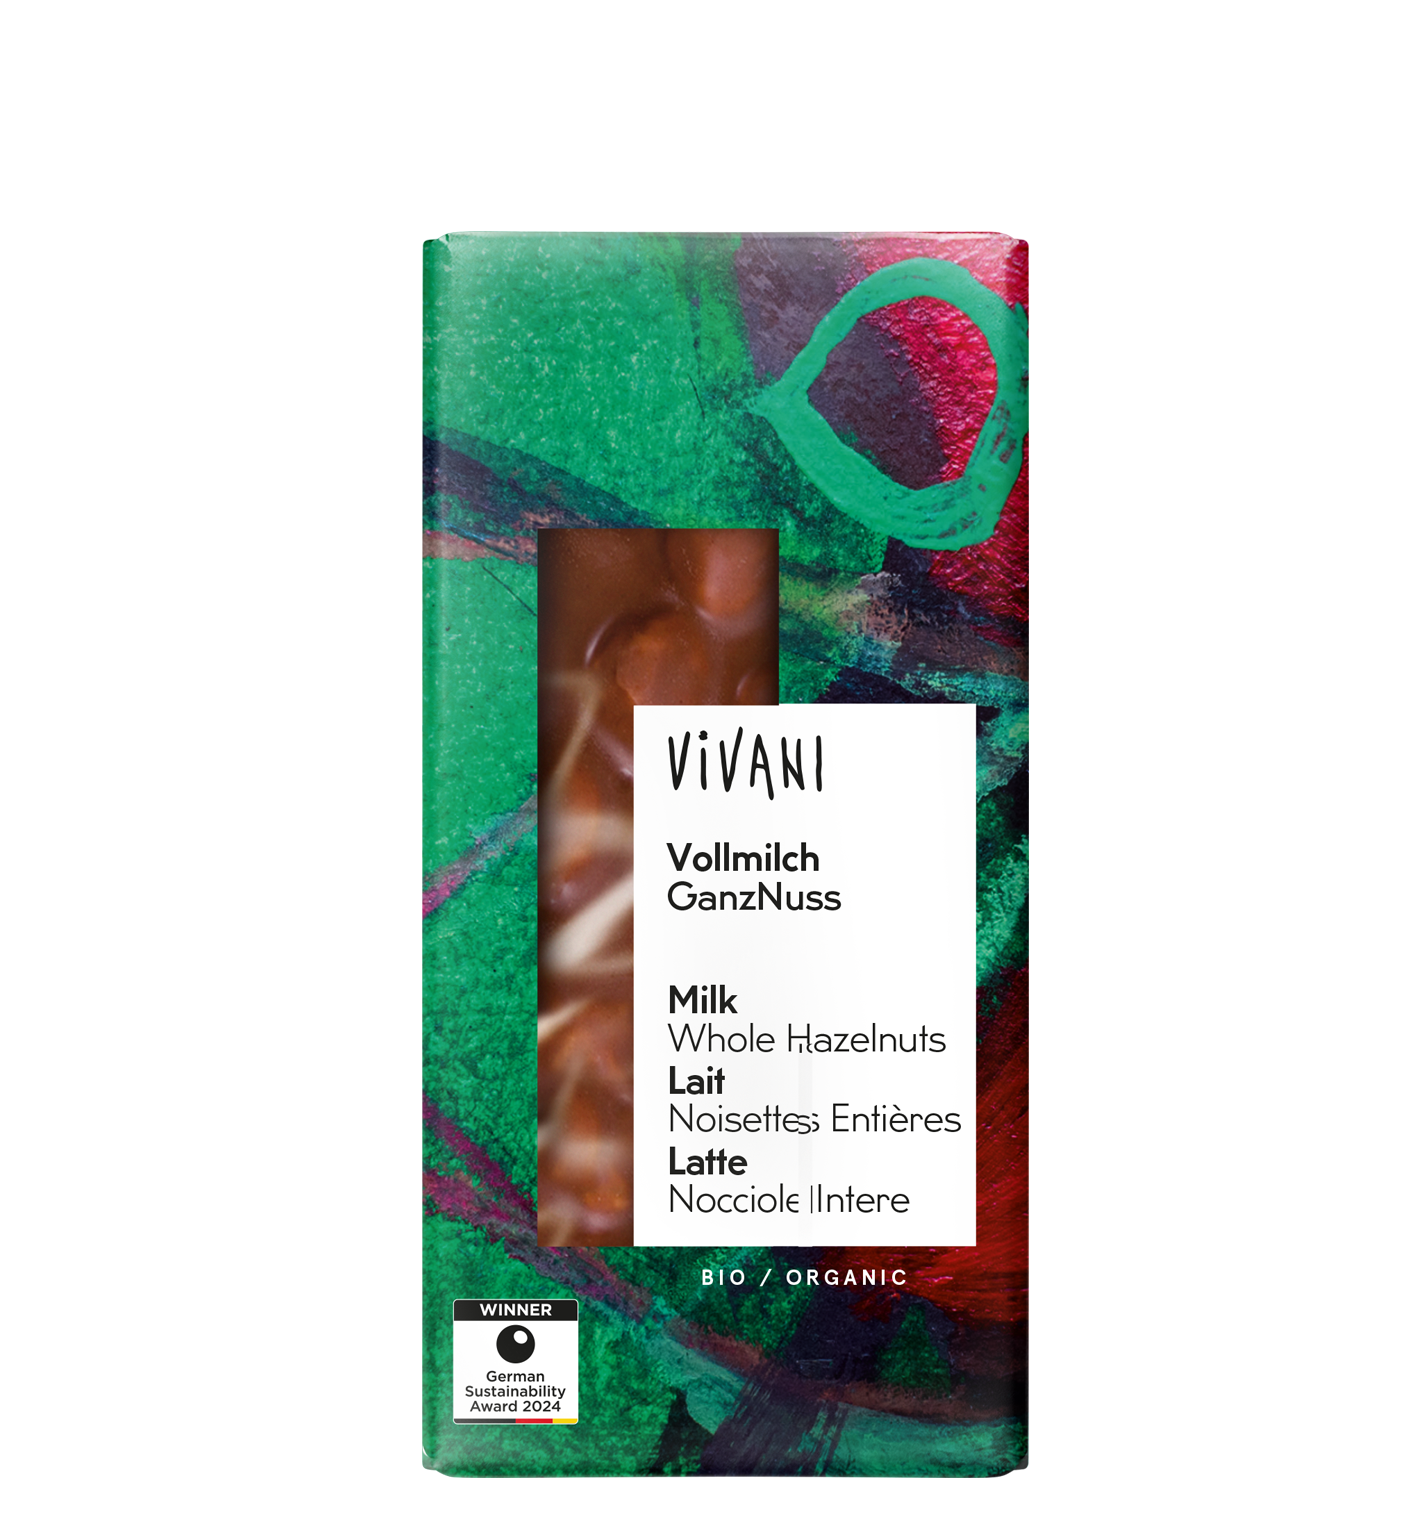 VIVANI's organic Milk Chocolate with roasted whole hazelnuts